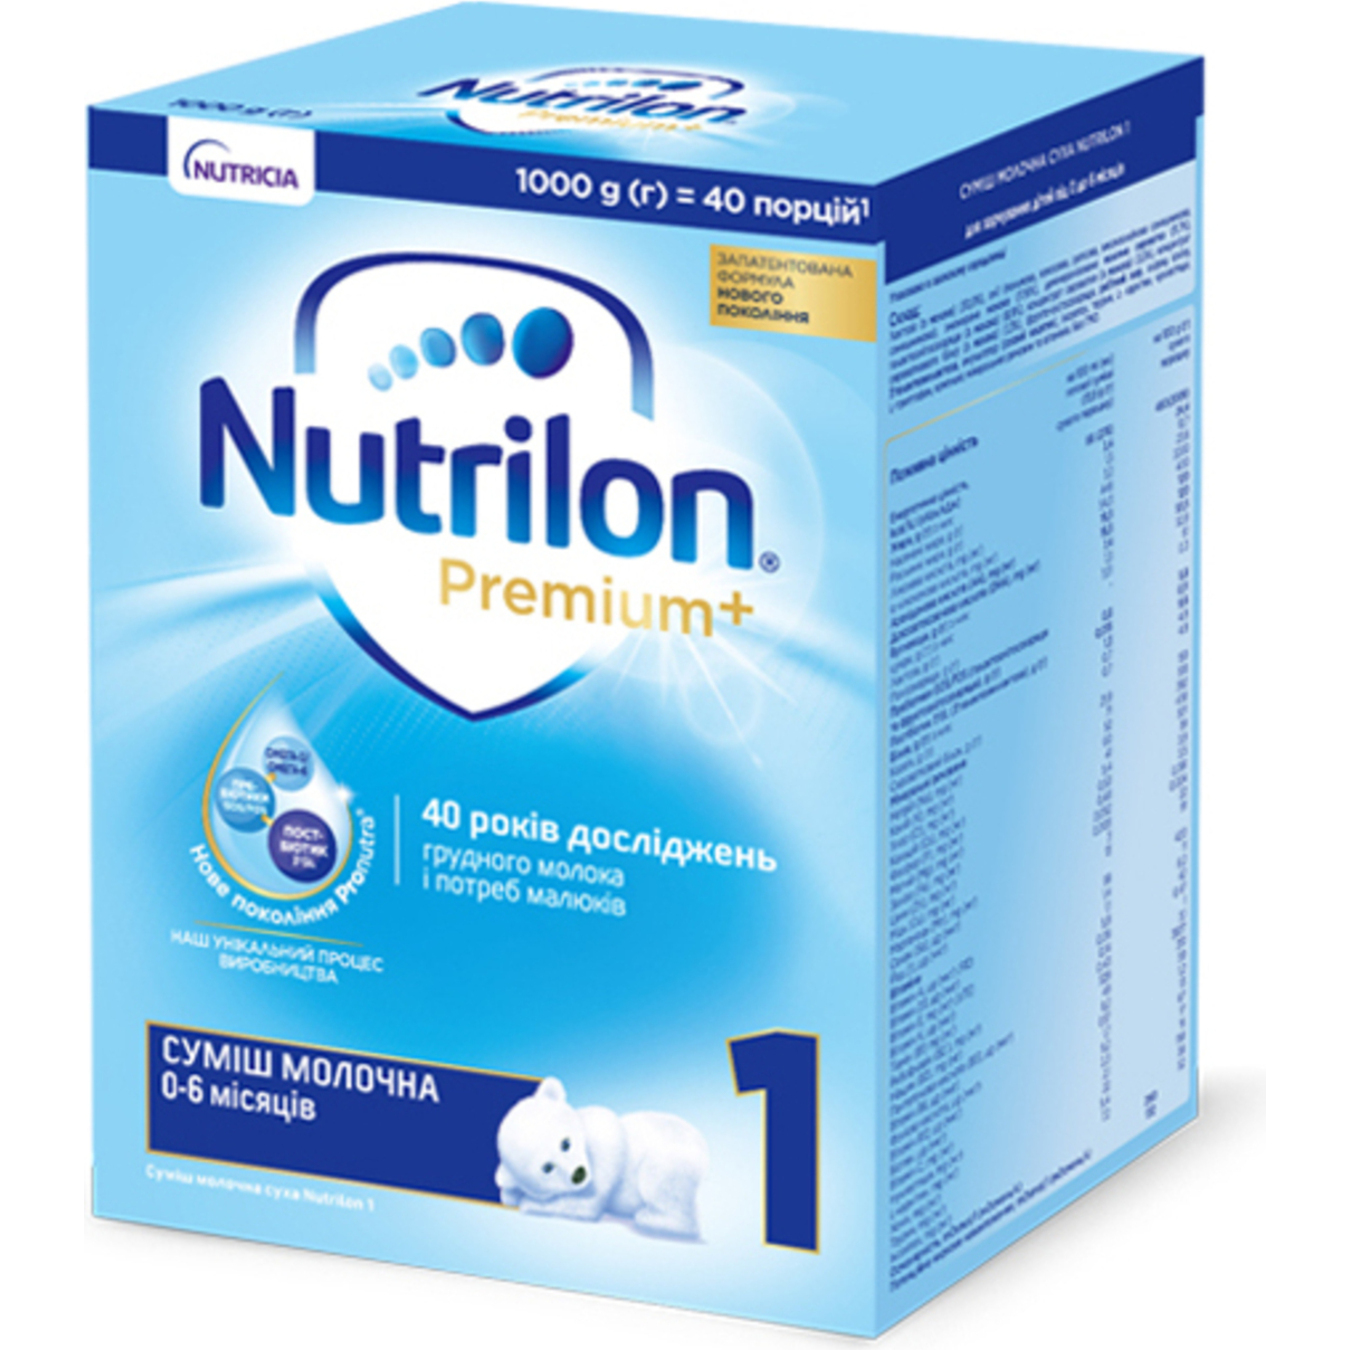 Nutrilon 1 from 0-6 month fot babies dry mixture milk 1000g